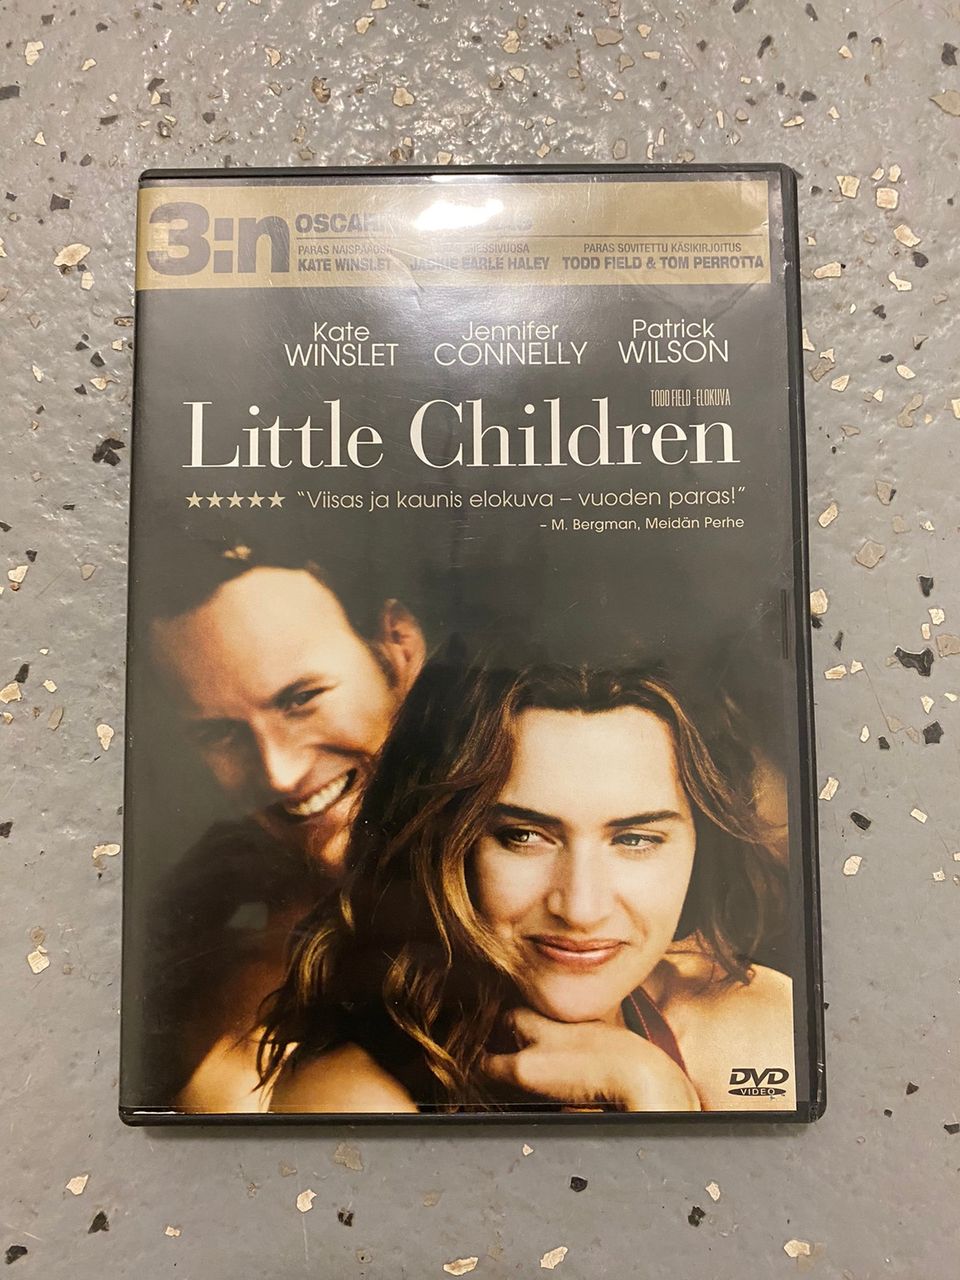 Little children dvd